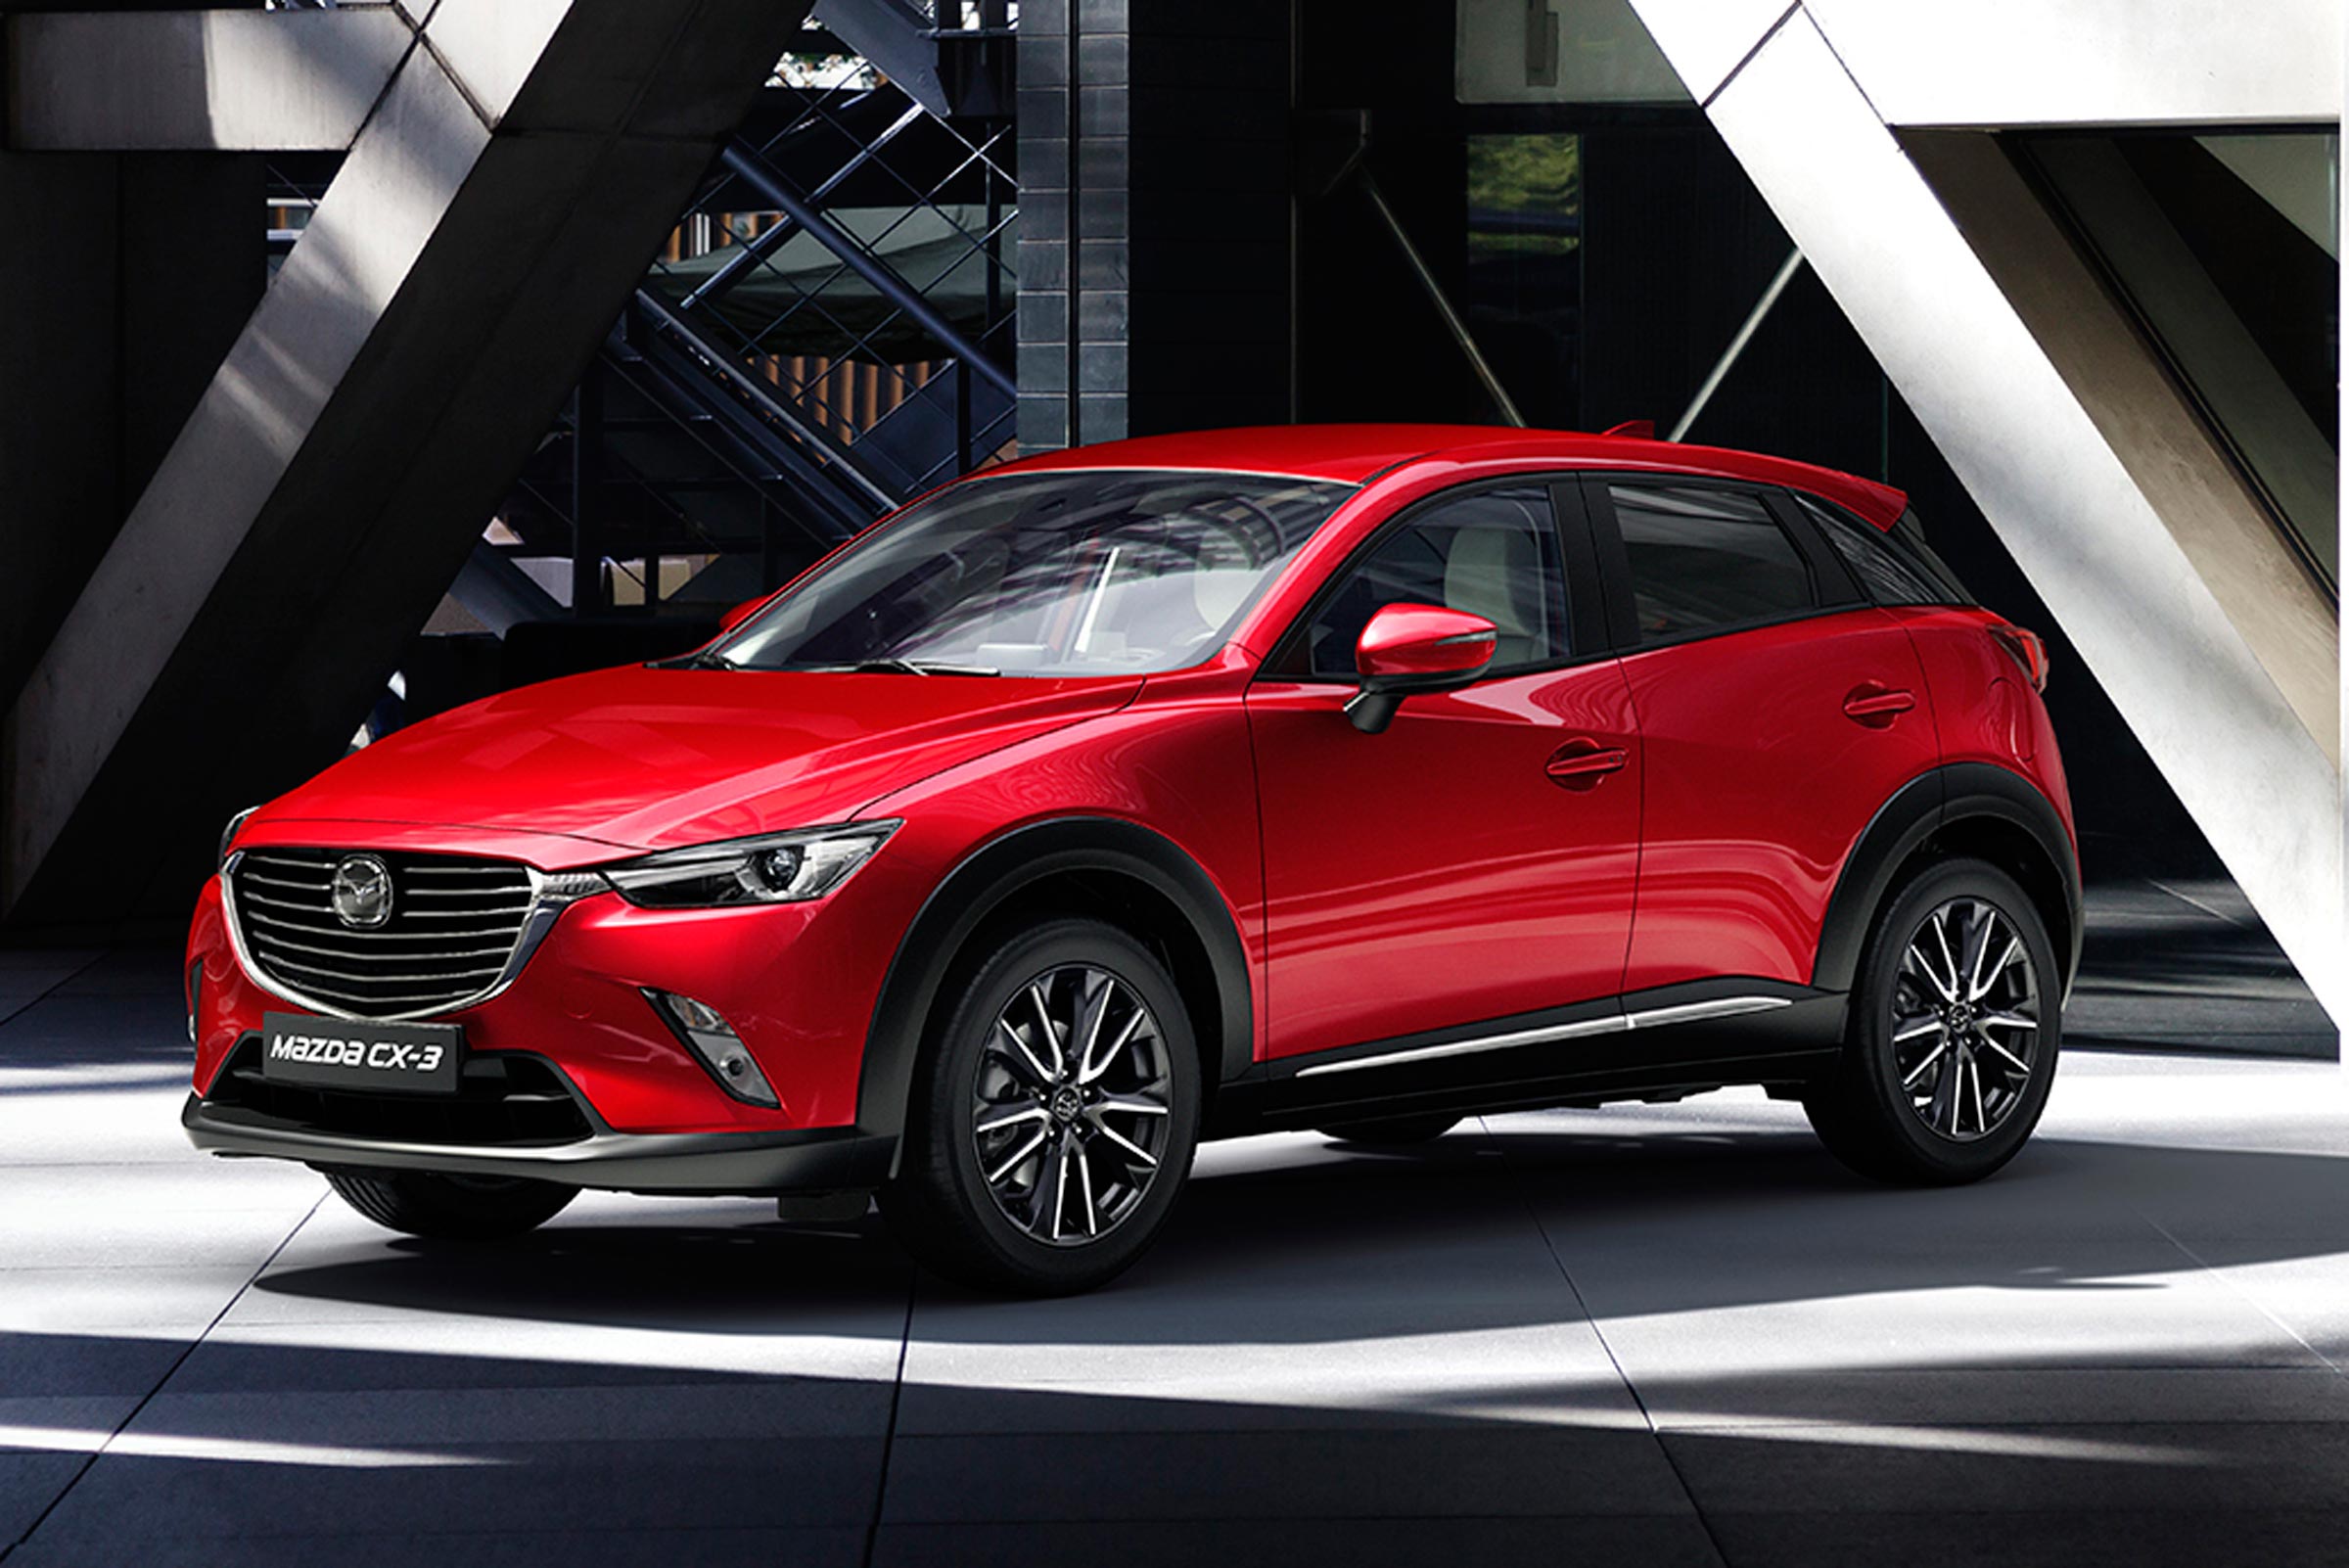 Mazda CX-3 2017 facelift images | Carbuyer